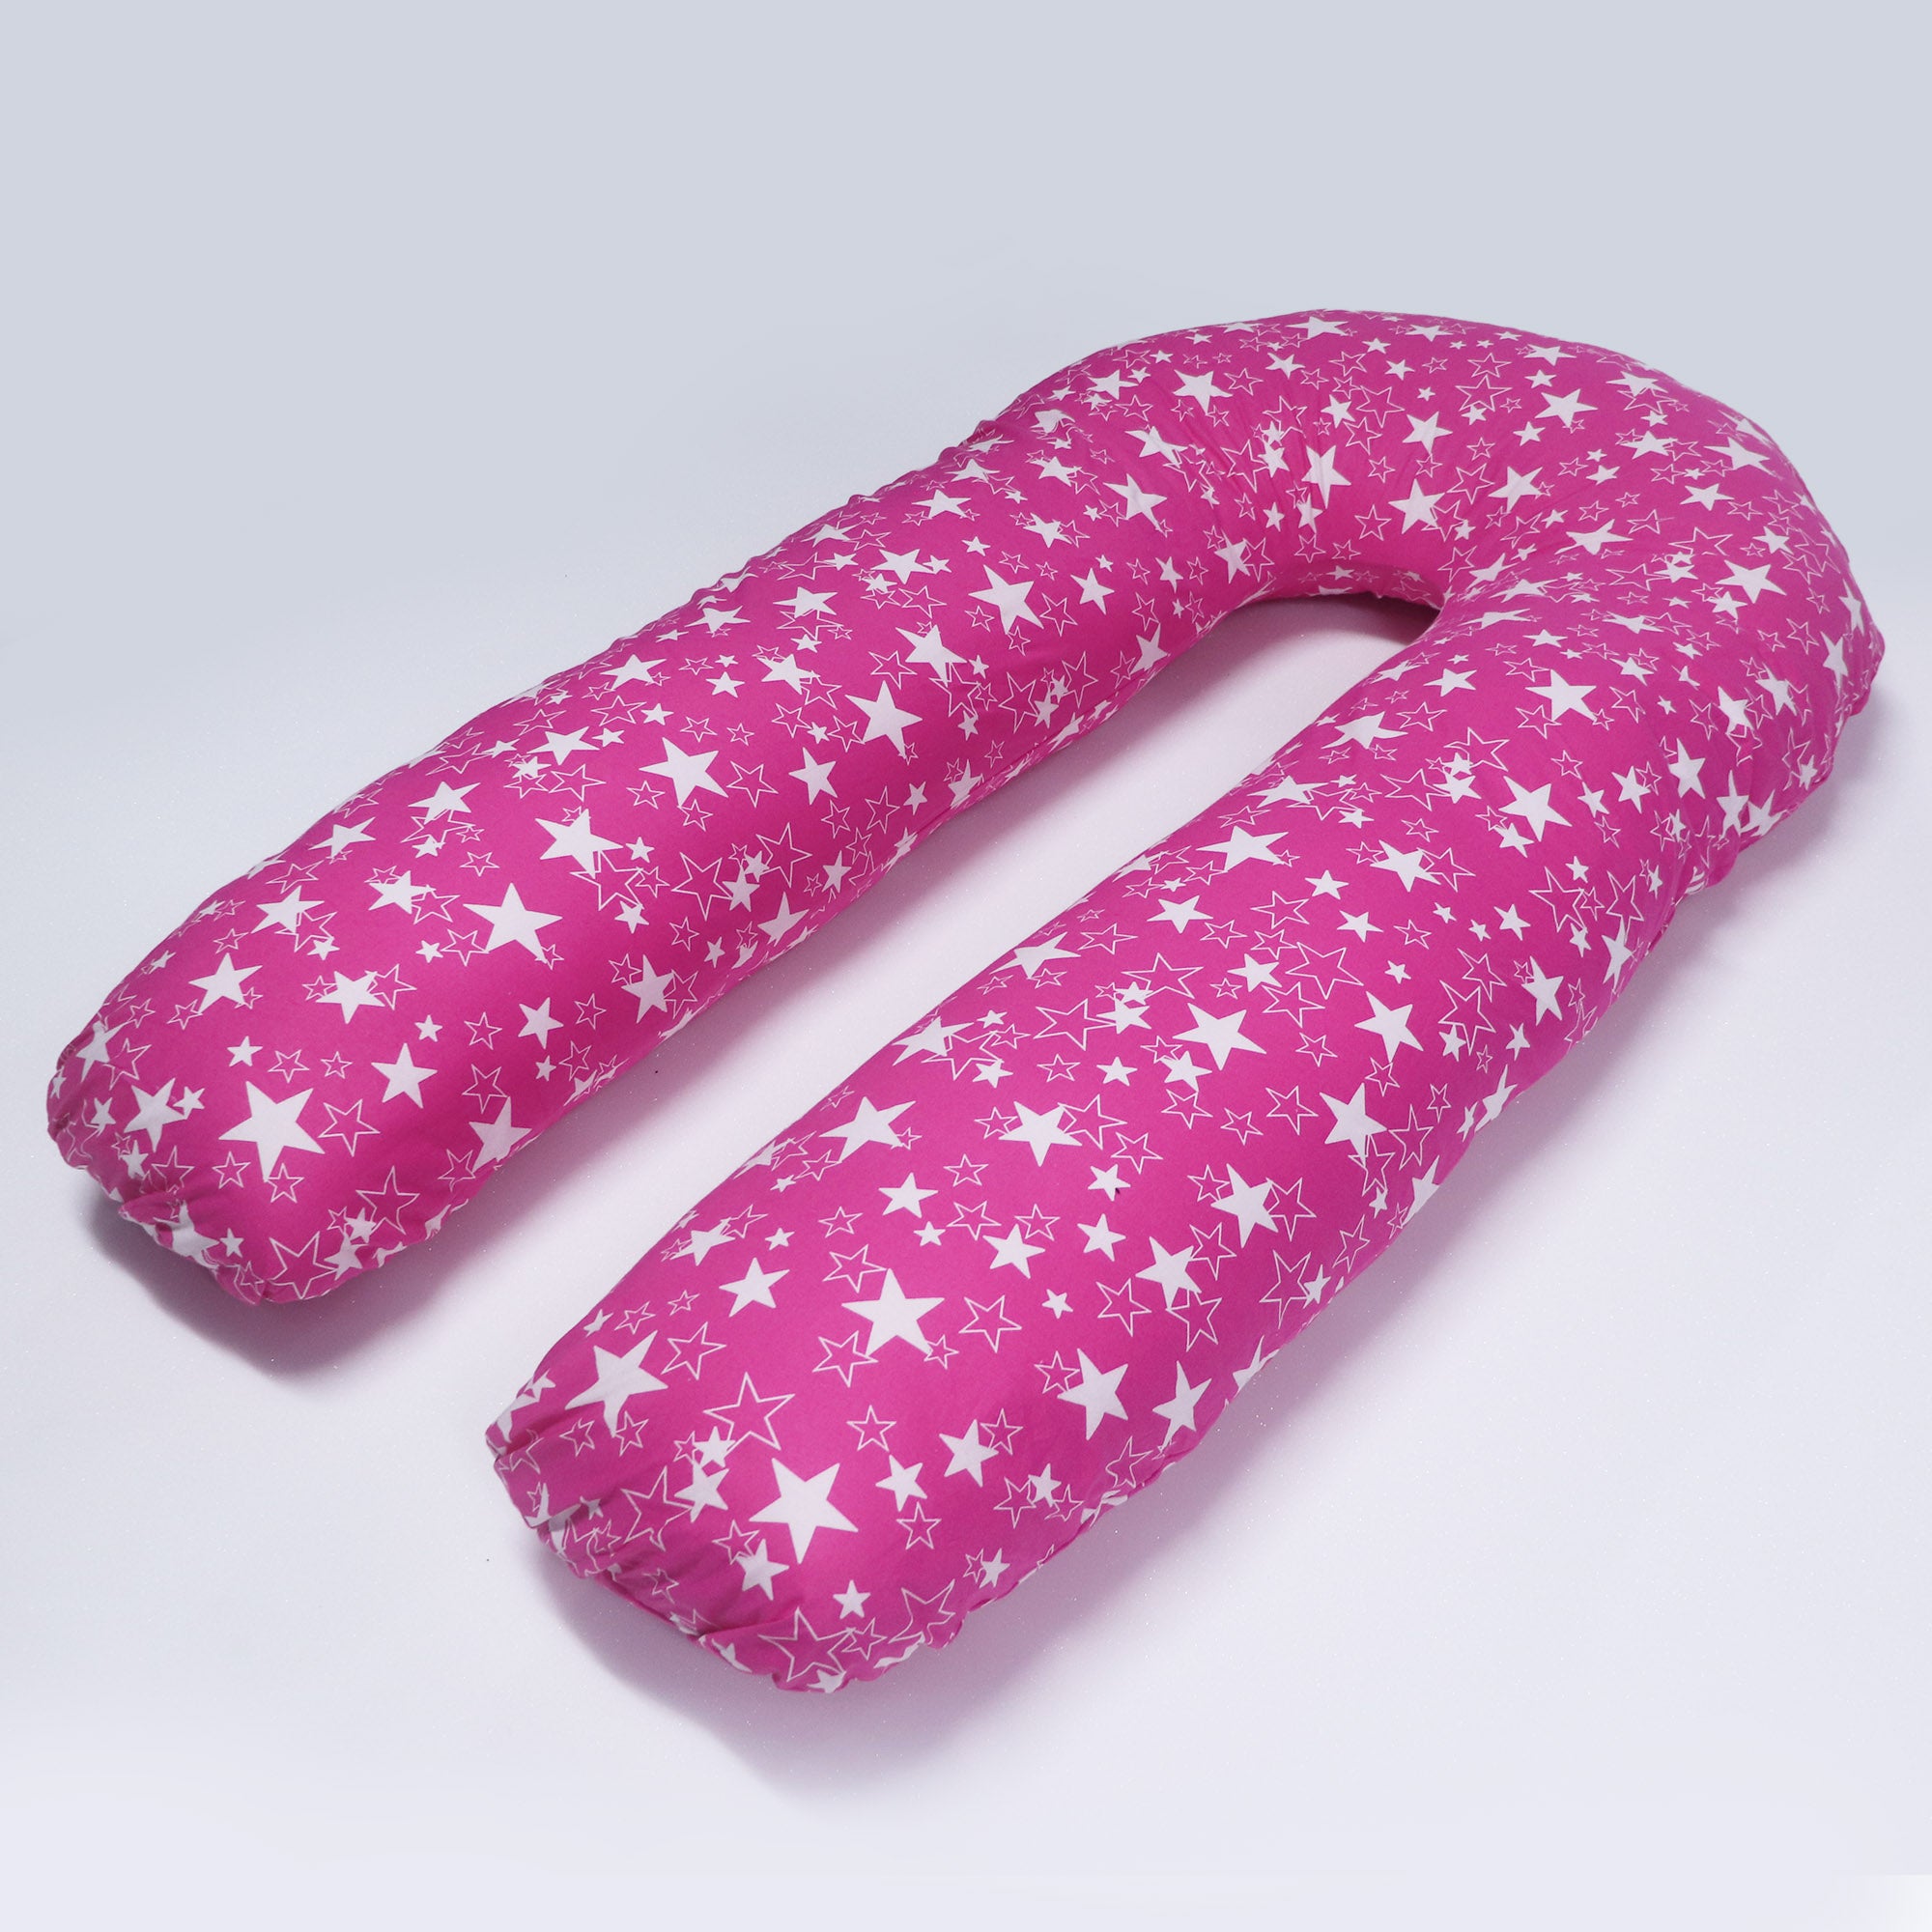 Pink Star Super Premium U Shape Pregnancy Body Pillow